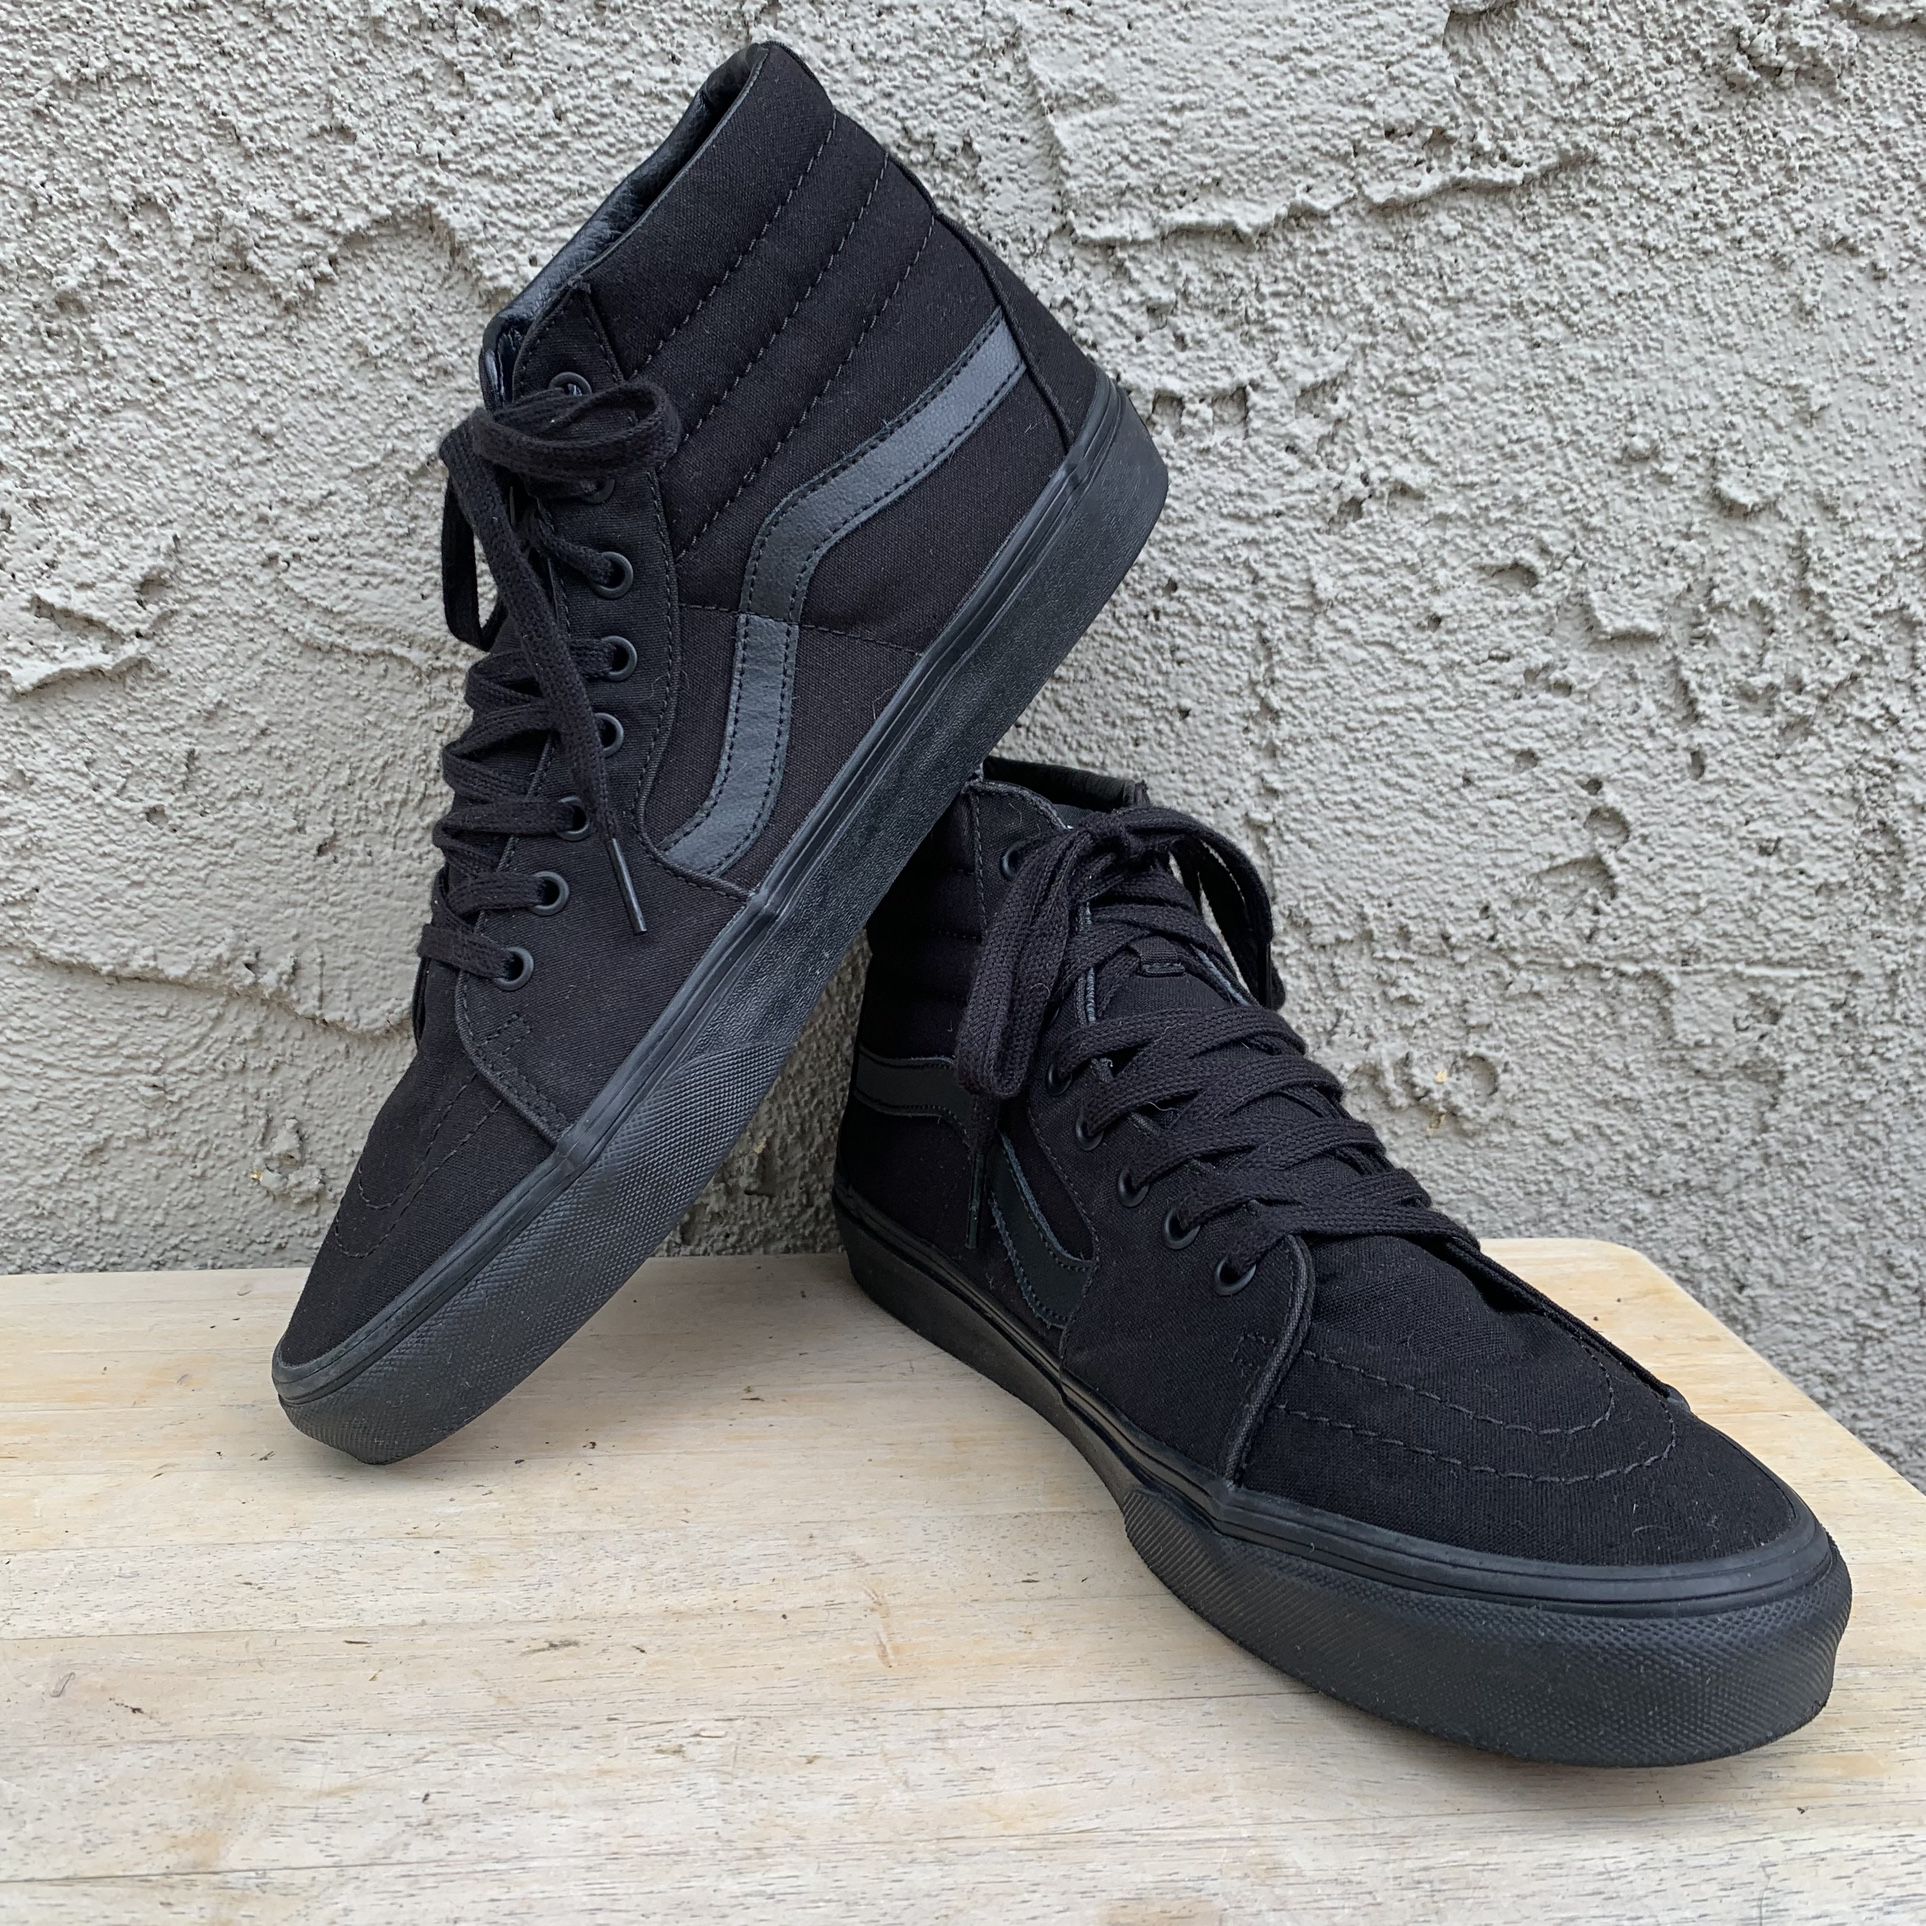 Vans Ward Hi Black High Top Sneakers Men's Size 12 Skate Shoes Sk8 